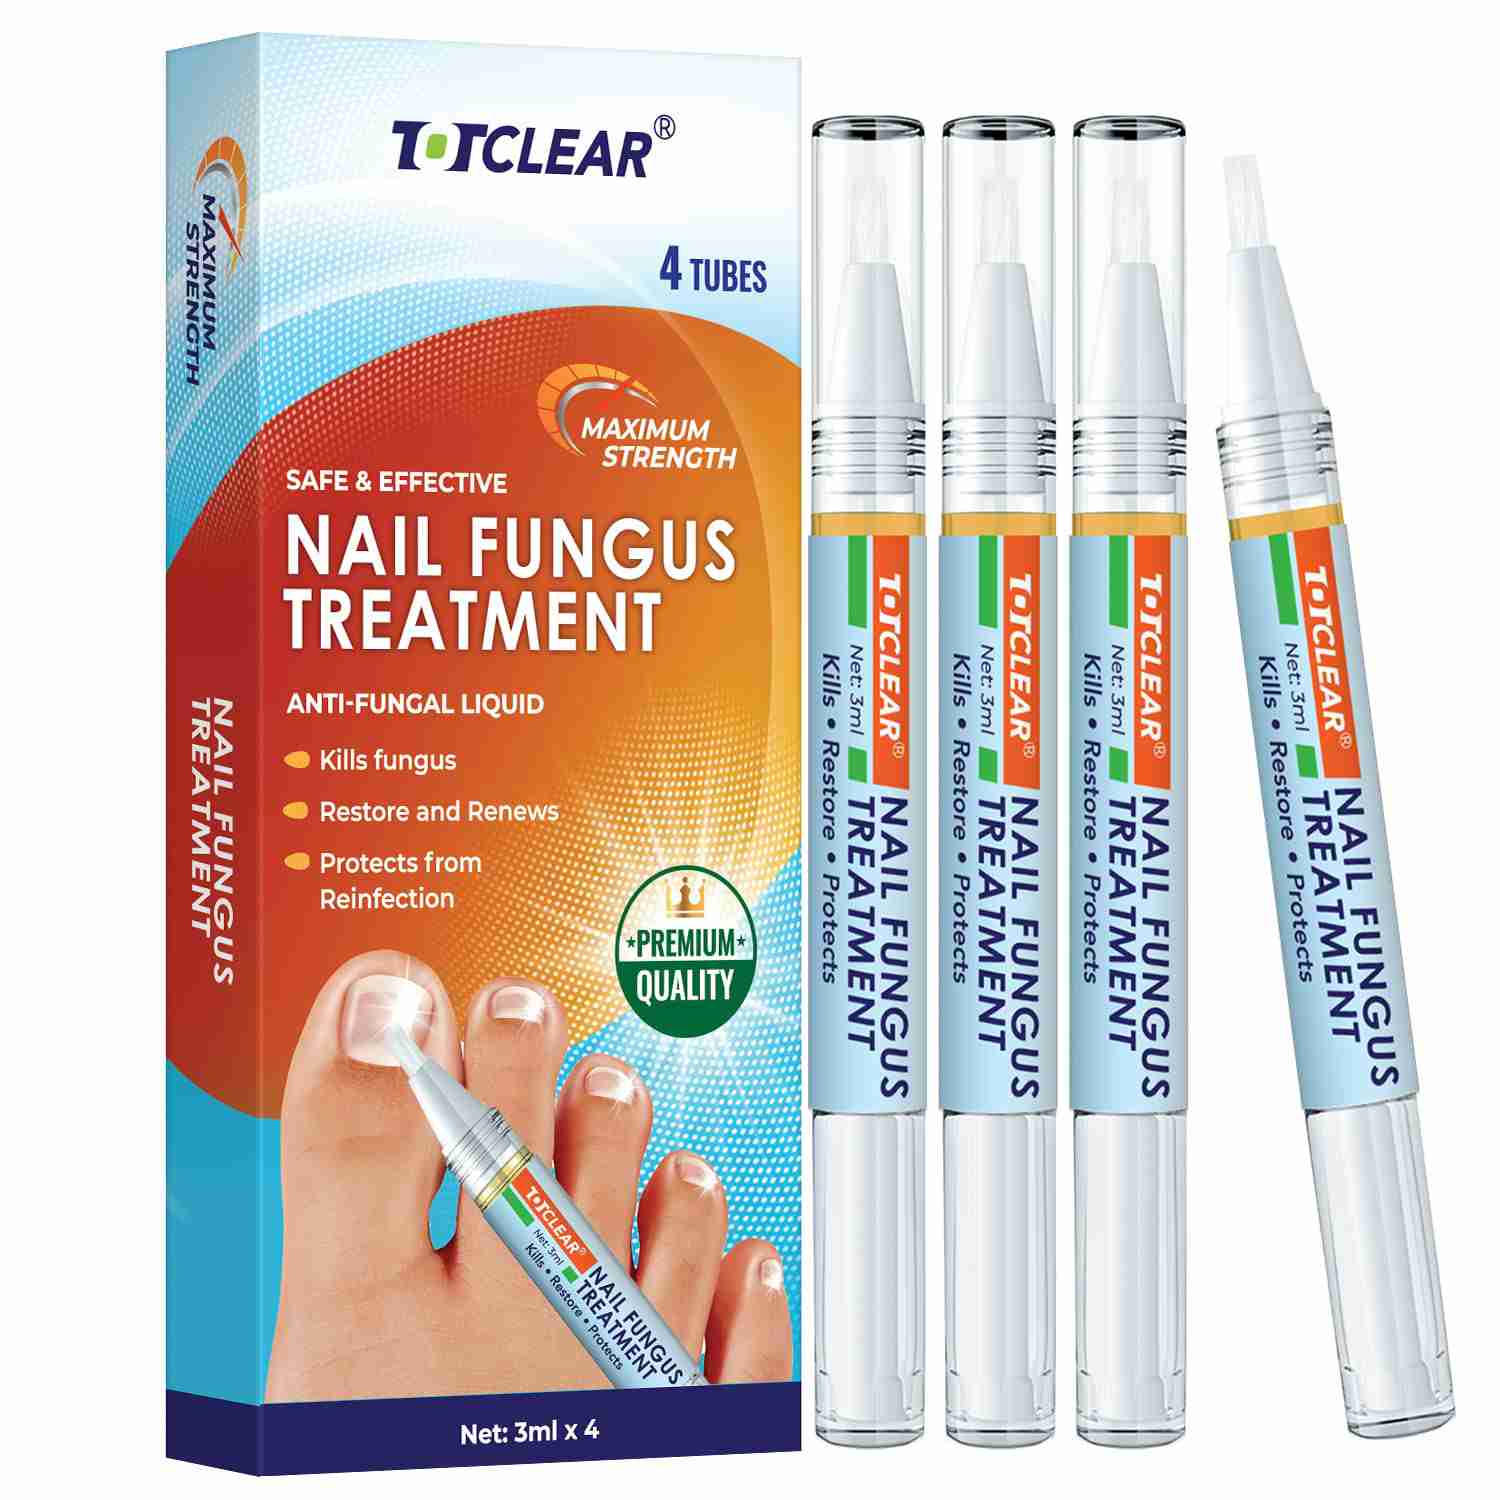 nail-fungus-treatment-for-toenail-4-pens with cash back rebate